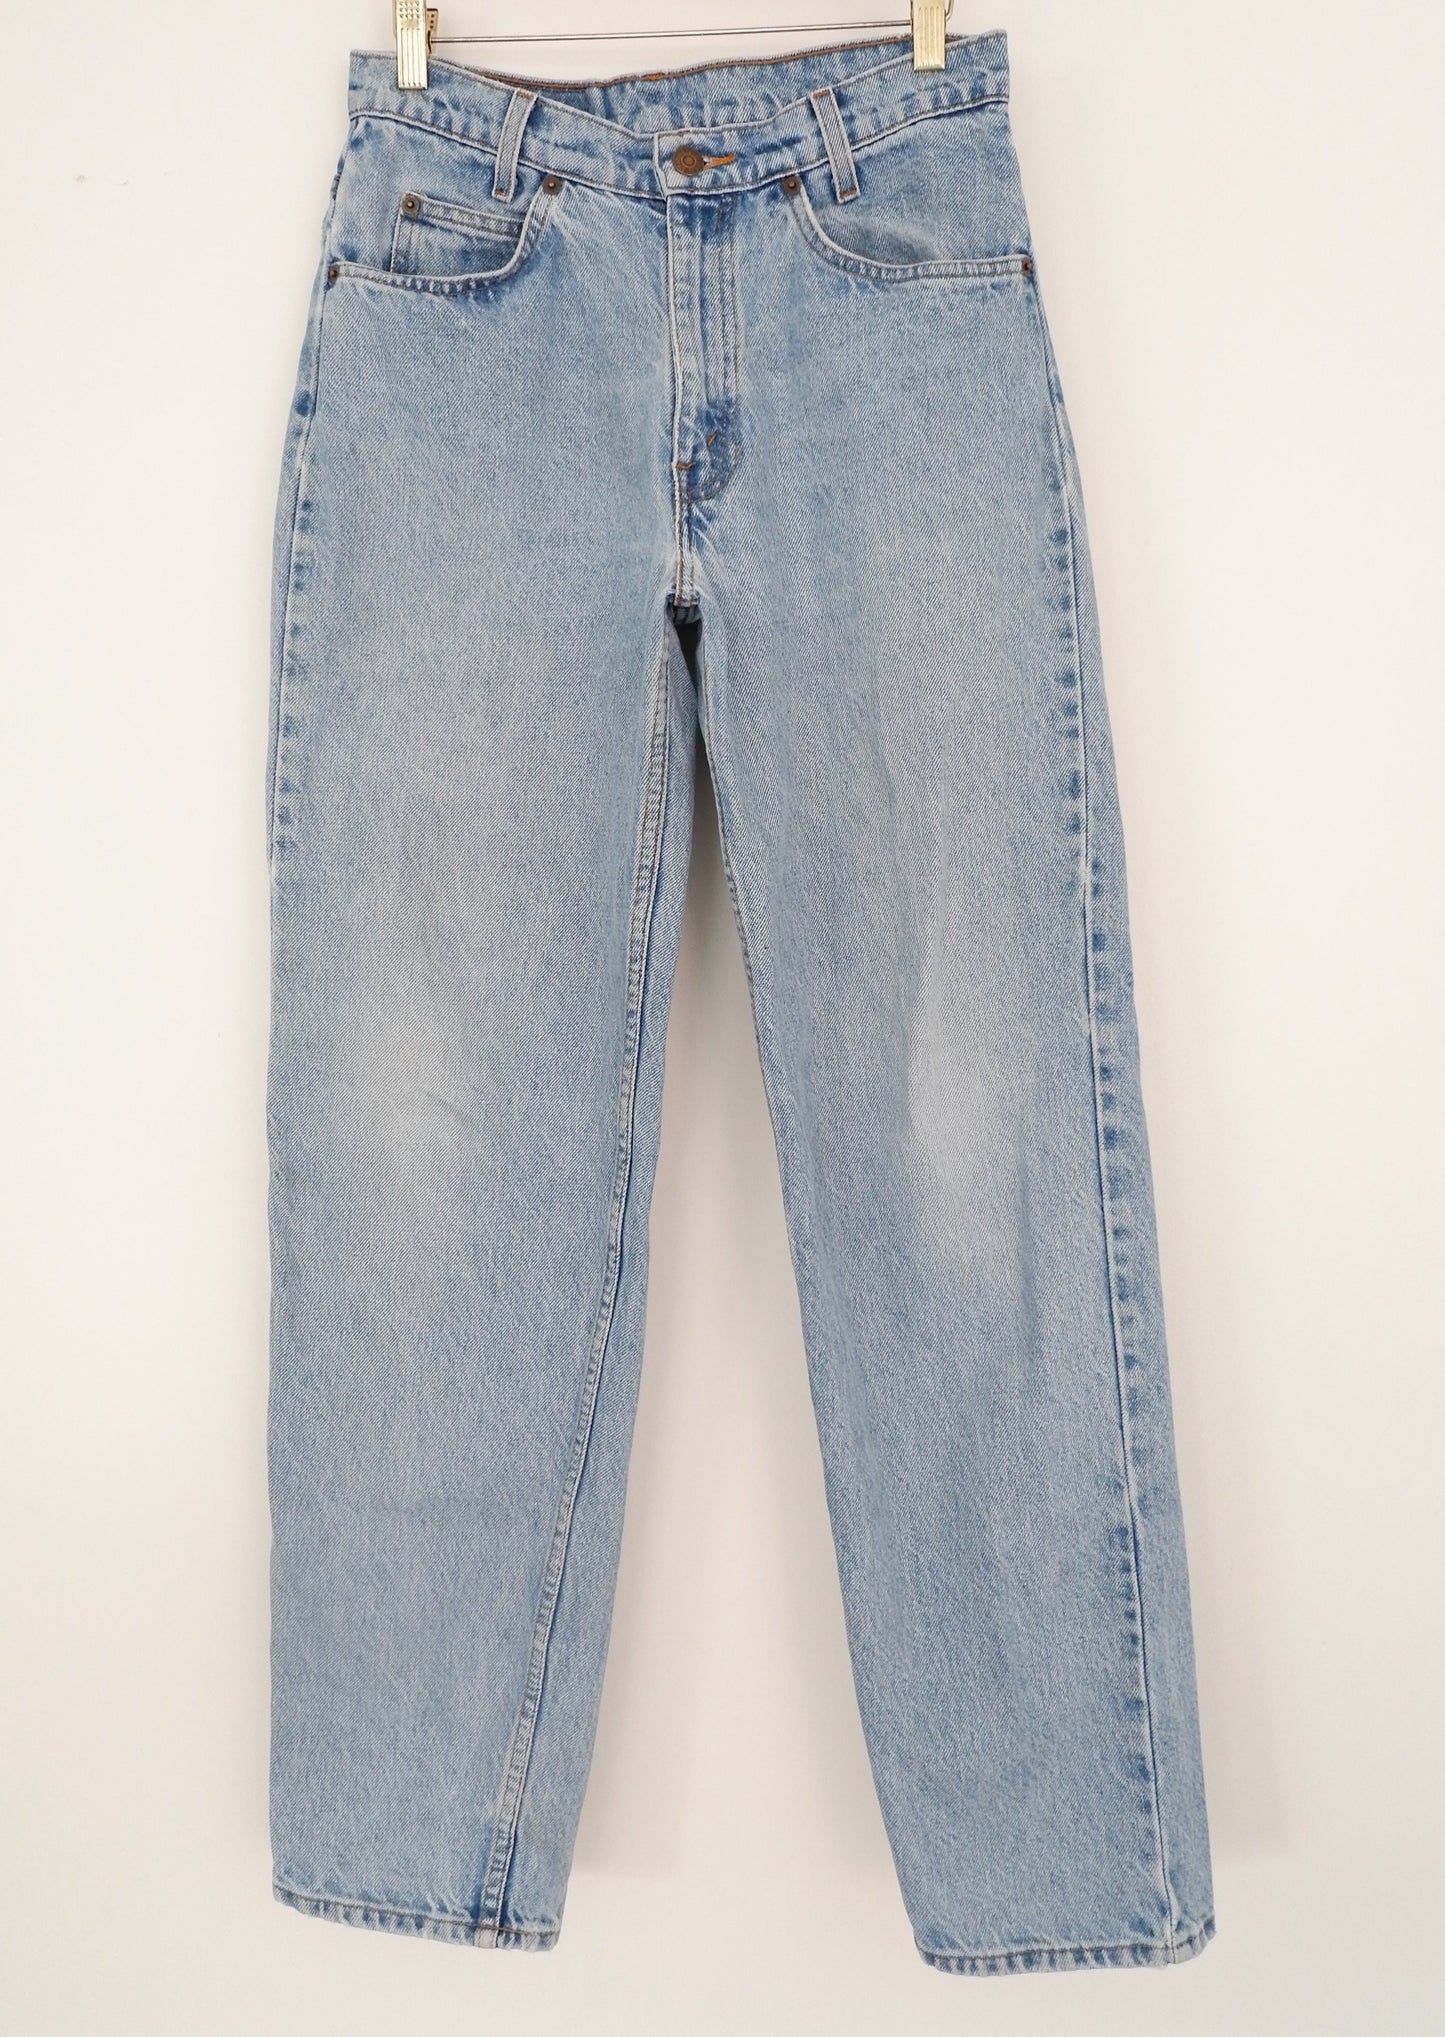 Levis Vintage 550 Medium Light Wash Jeans - 27